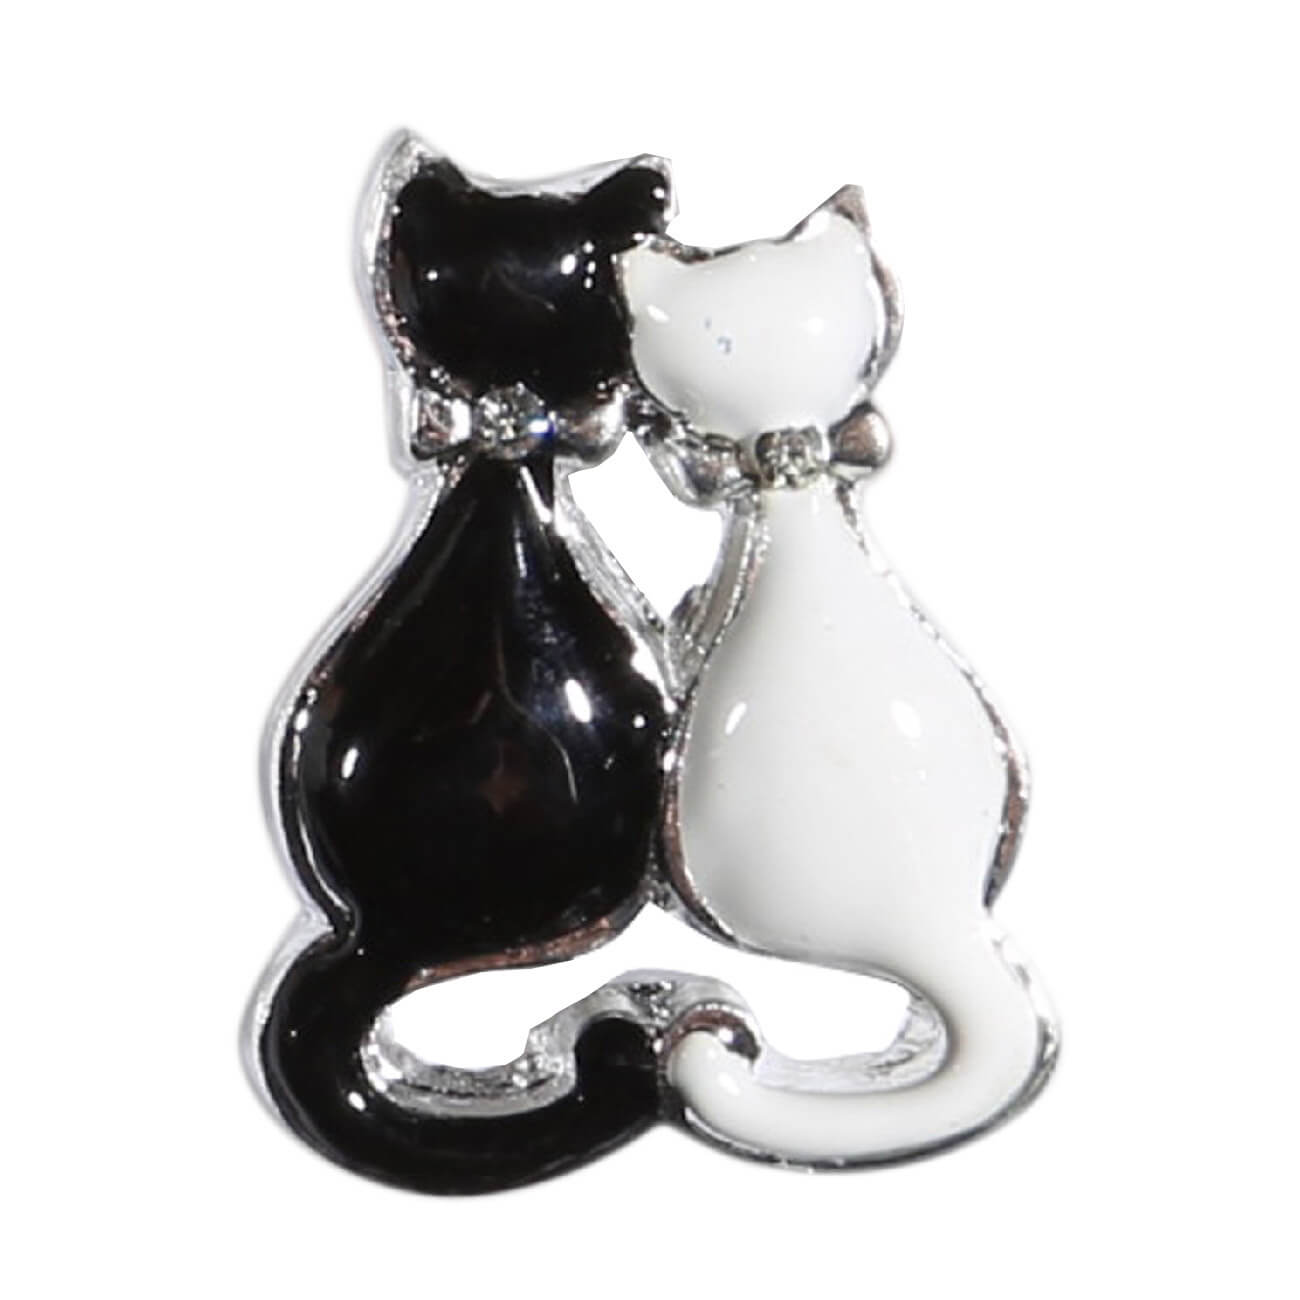 Magnet, 4 cm, polyresin, black / white, Cats, Cat изображение № 1